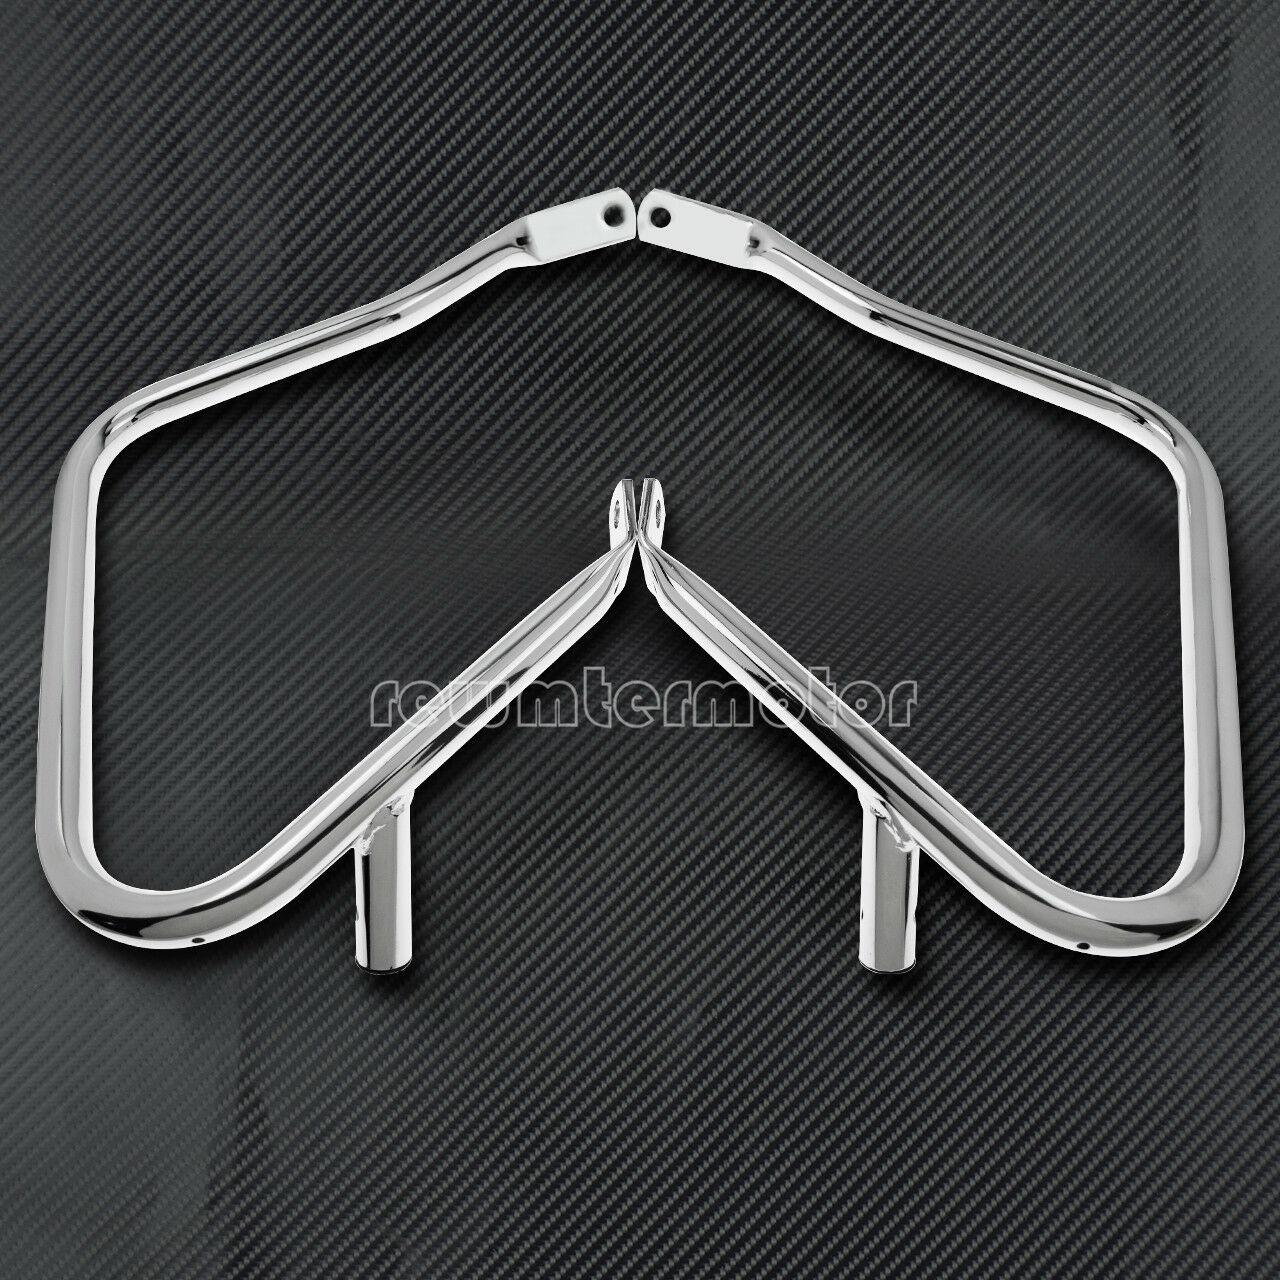 Chrome Saddlebag Bracket Guard Set w/ Support Bar Fit For Harley Touring 2014-18 - Moto Life Products